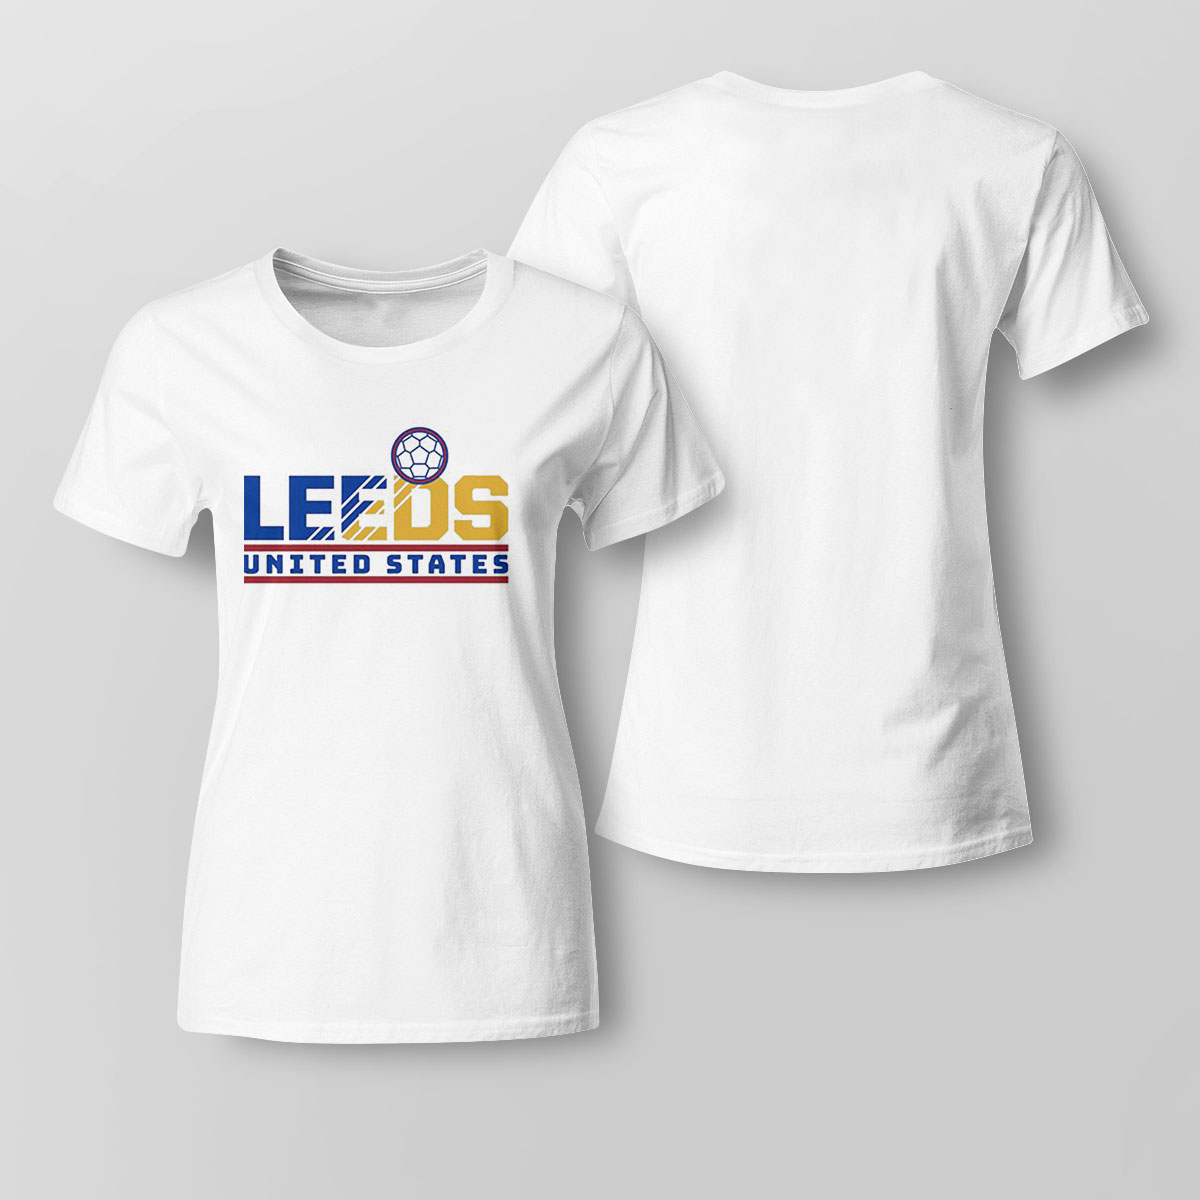 Leeds Soccer Leeds United States Shirt Longsleeve